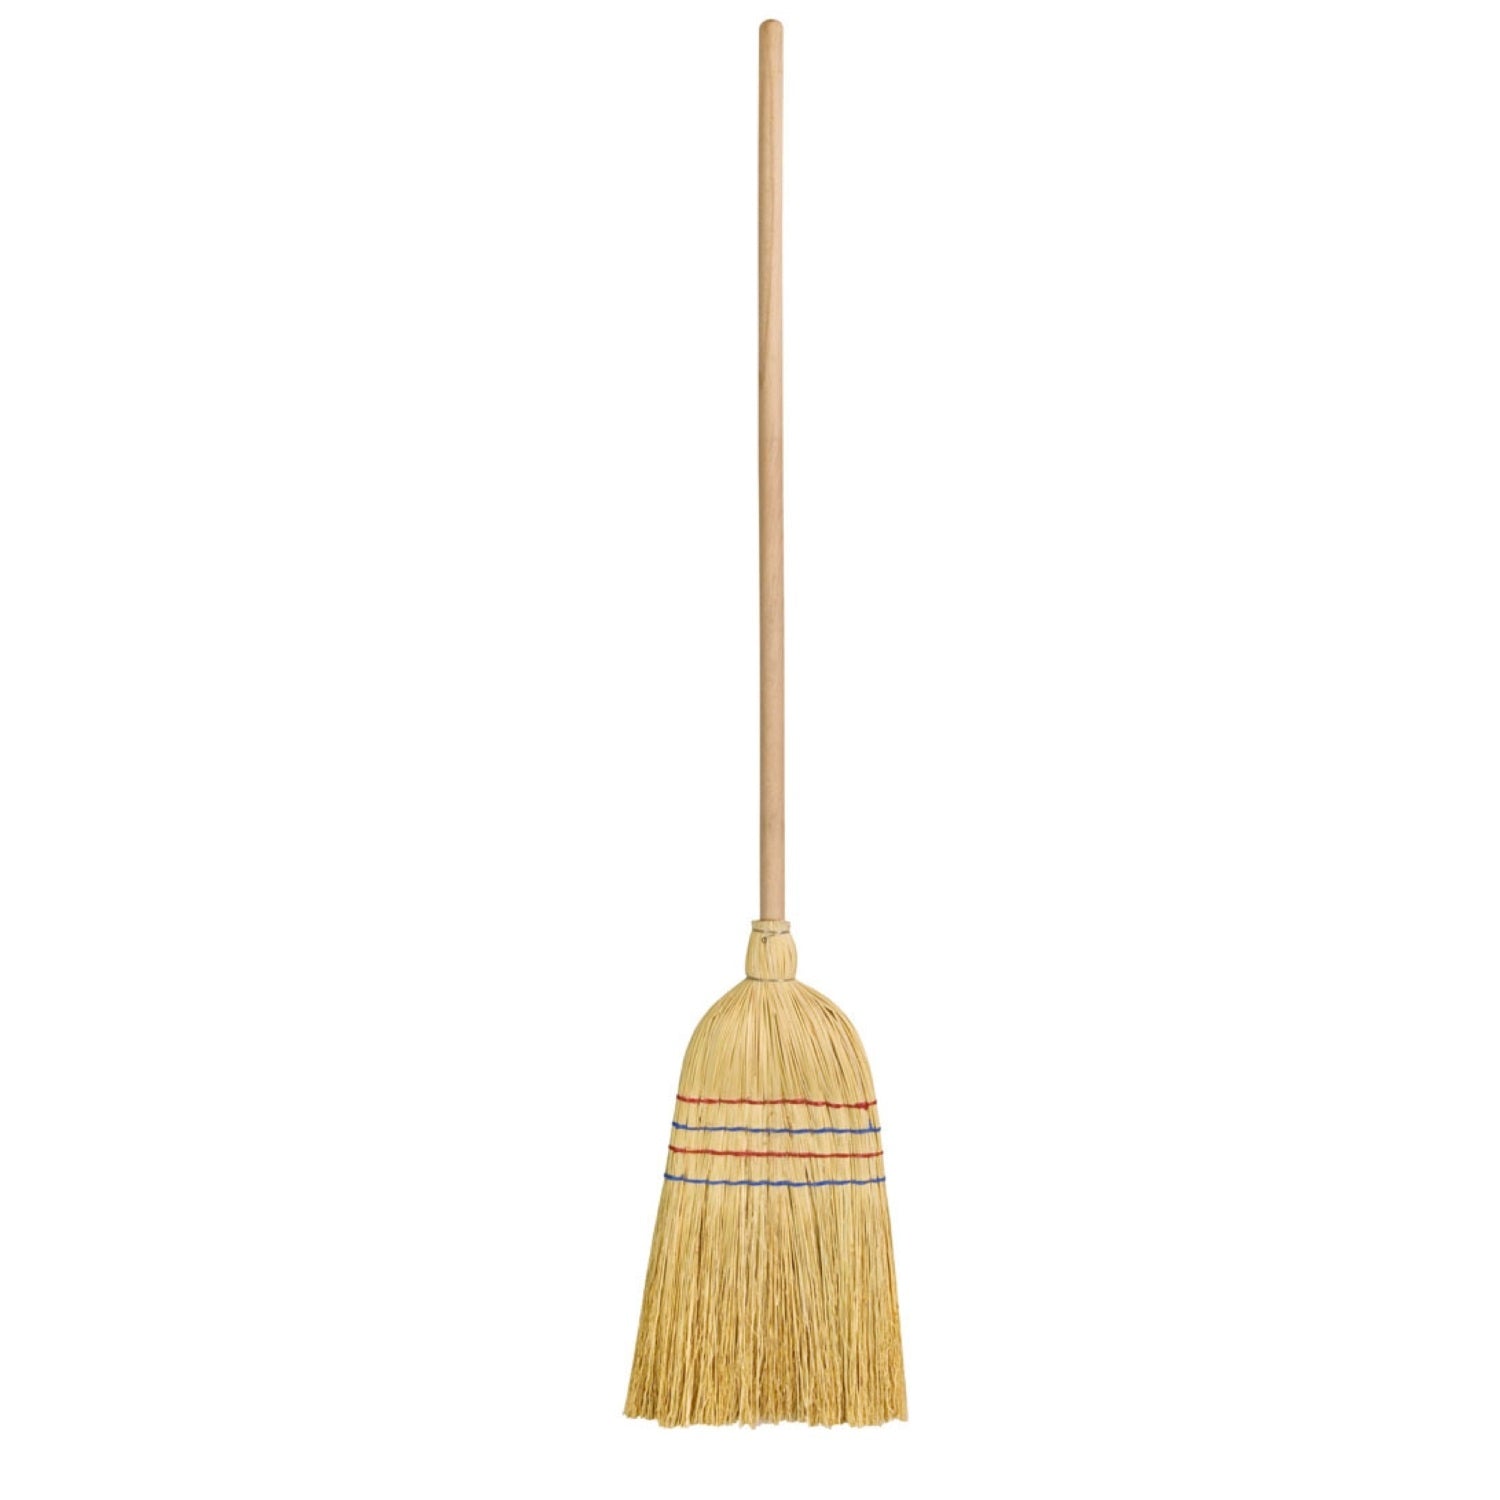 Elliott 10F30112 Traditional Corn Broom - Premium Brushes / Brooms from Elliott - Just $12.95! Shop now at W Hurst & Son (IW) Ltd